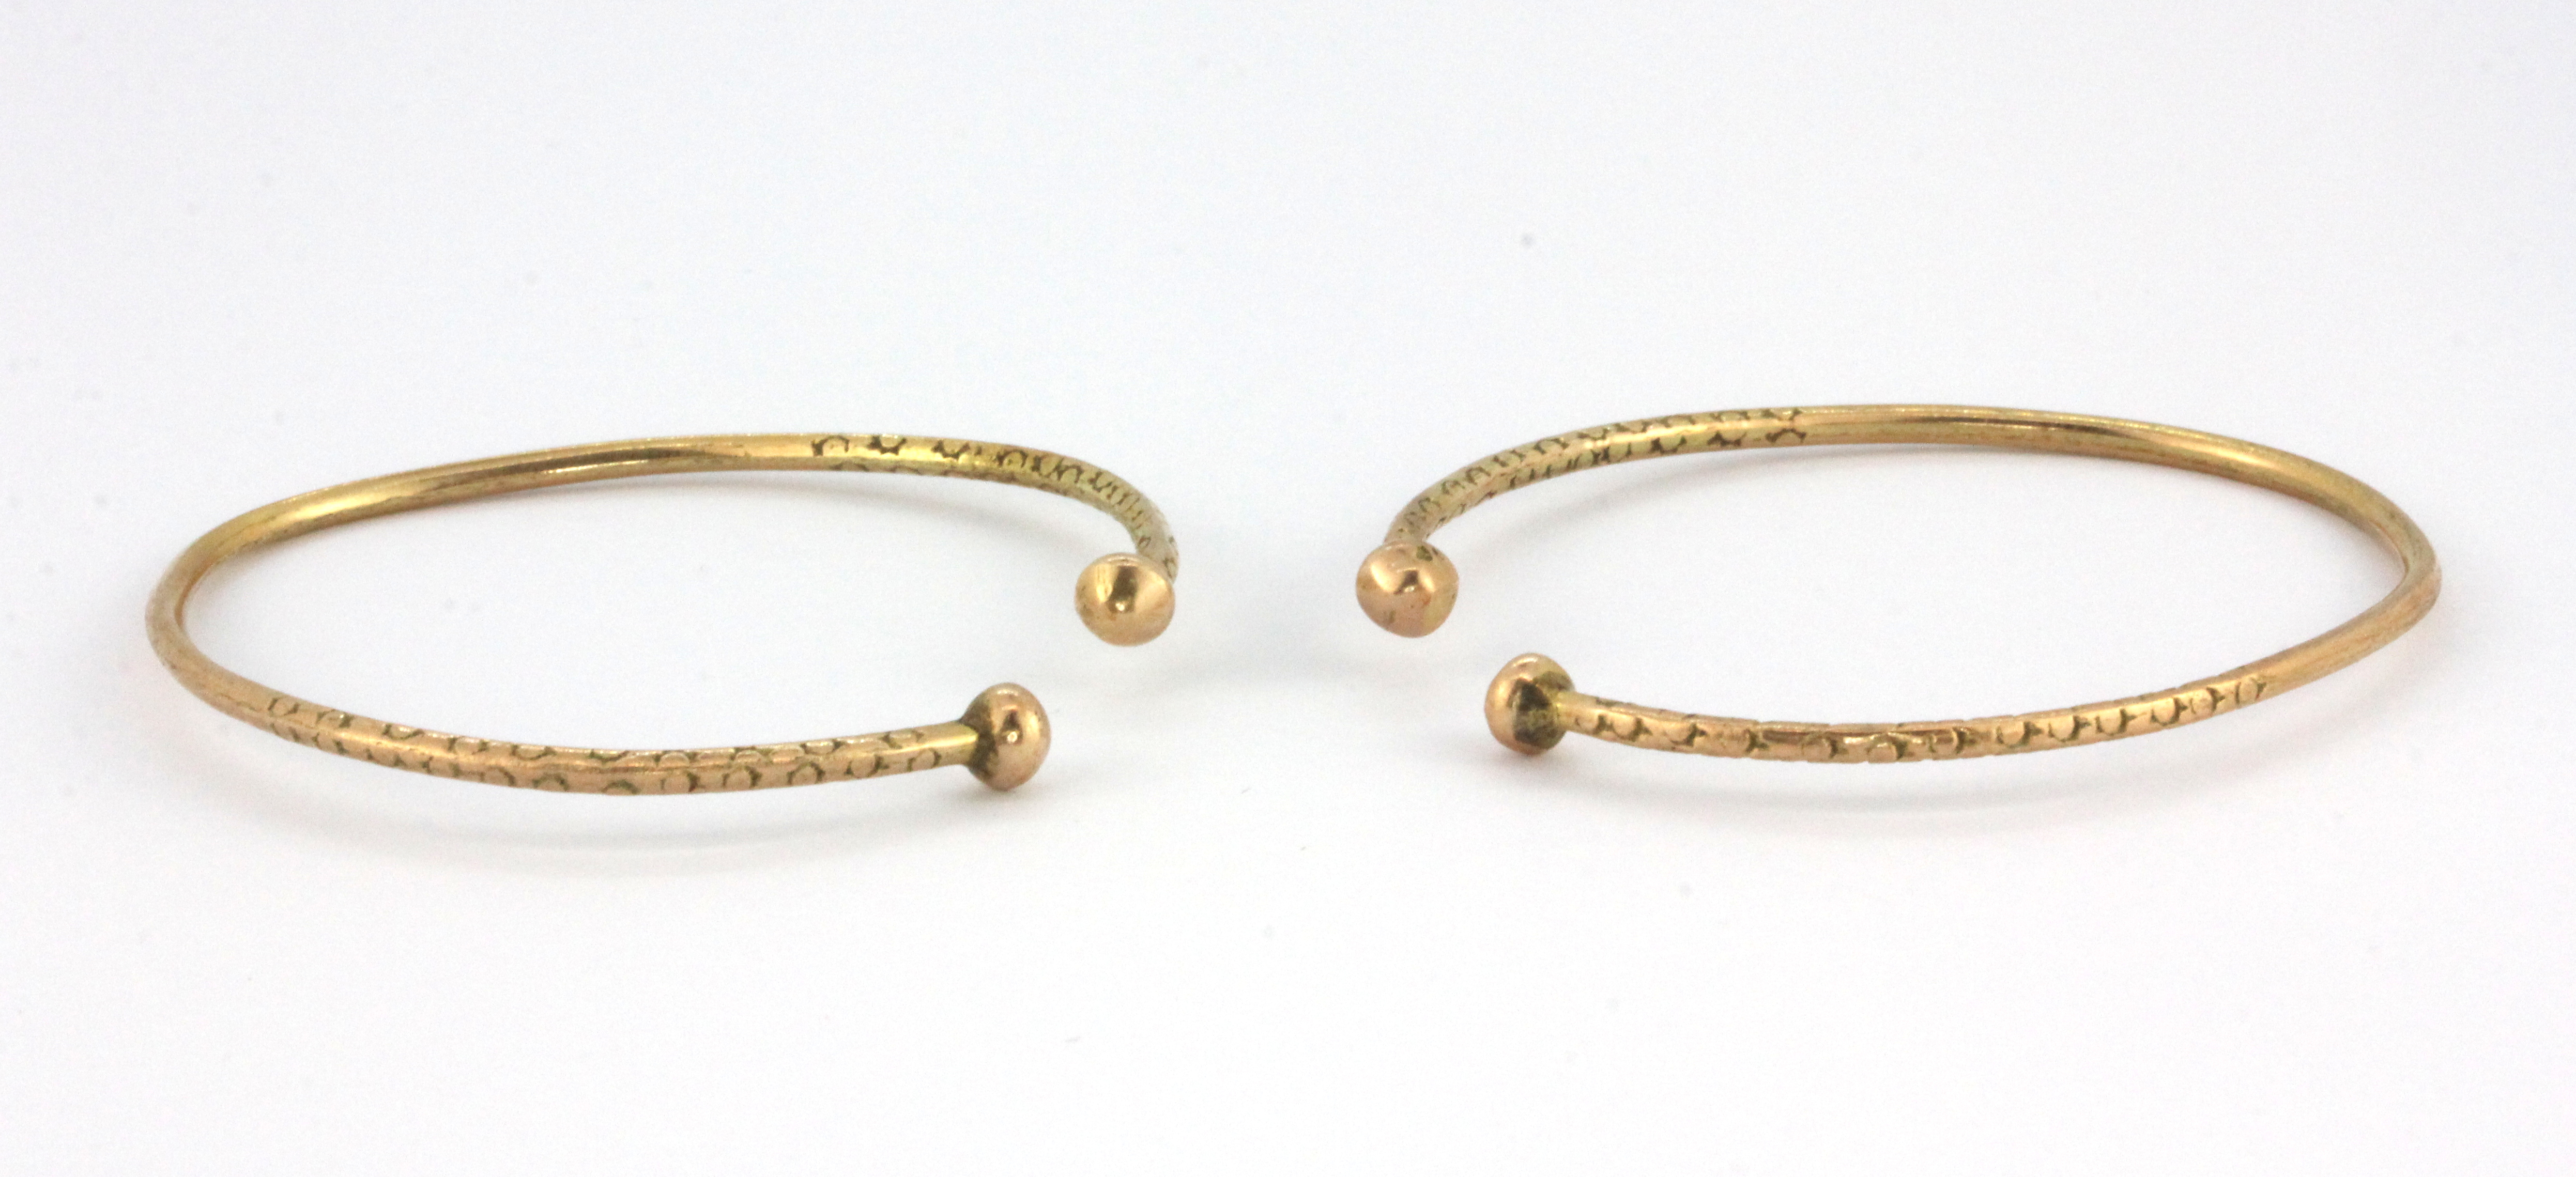 Two yellow metal (tested minimum 14 carat gold) adjustable baby bangles.